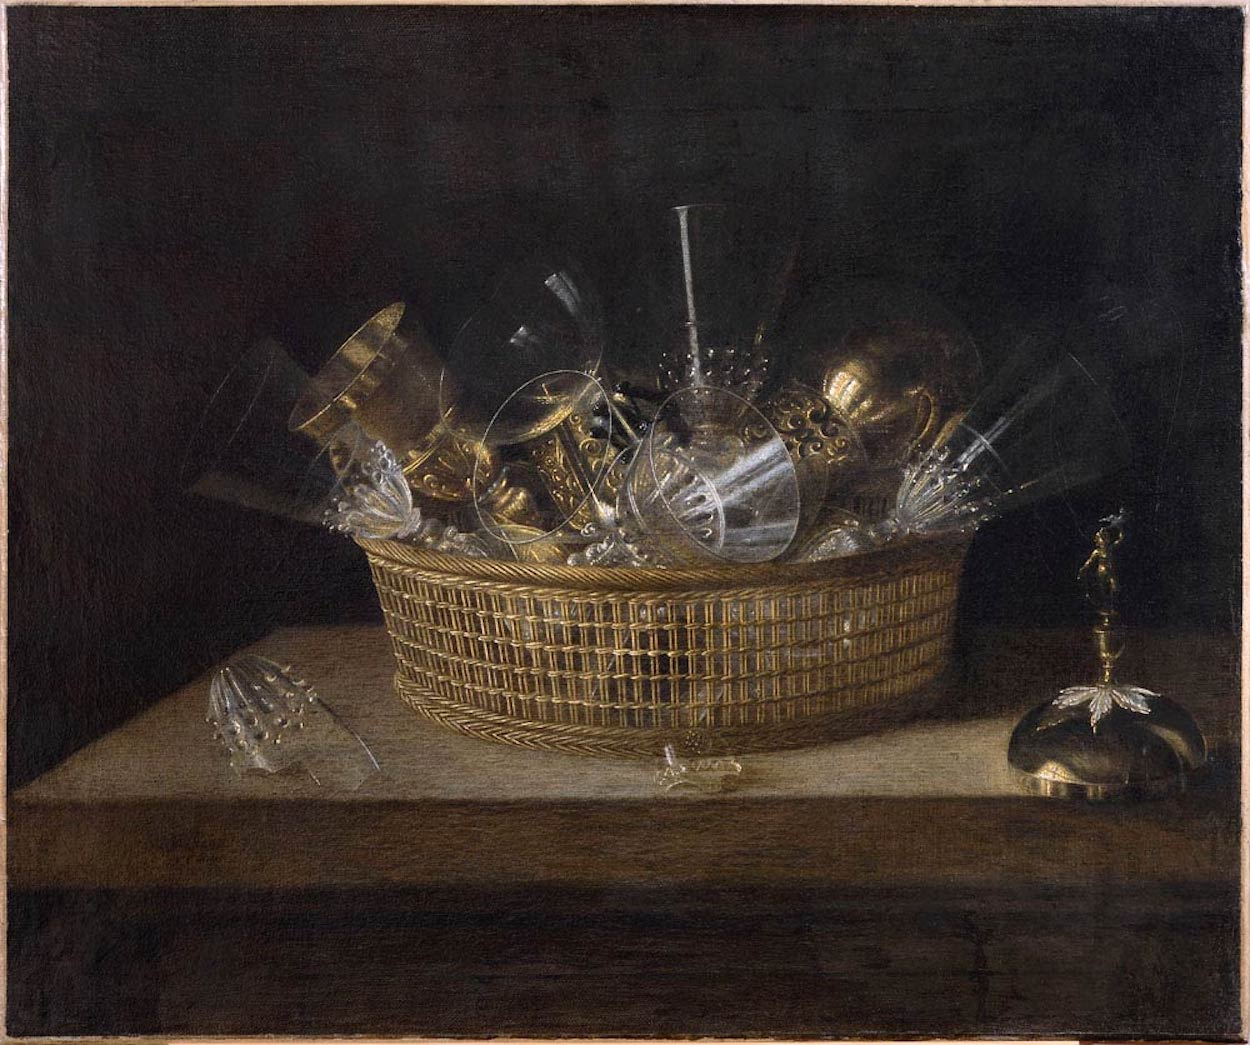 Coș cu pahare by Sébastien Stoskopff - 1644 - 52 x 63 cm 